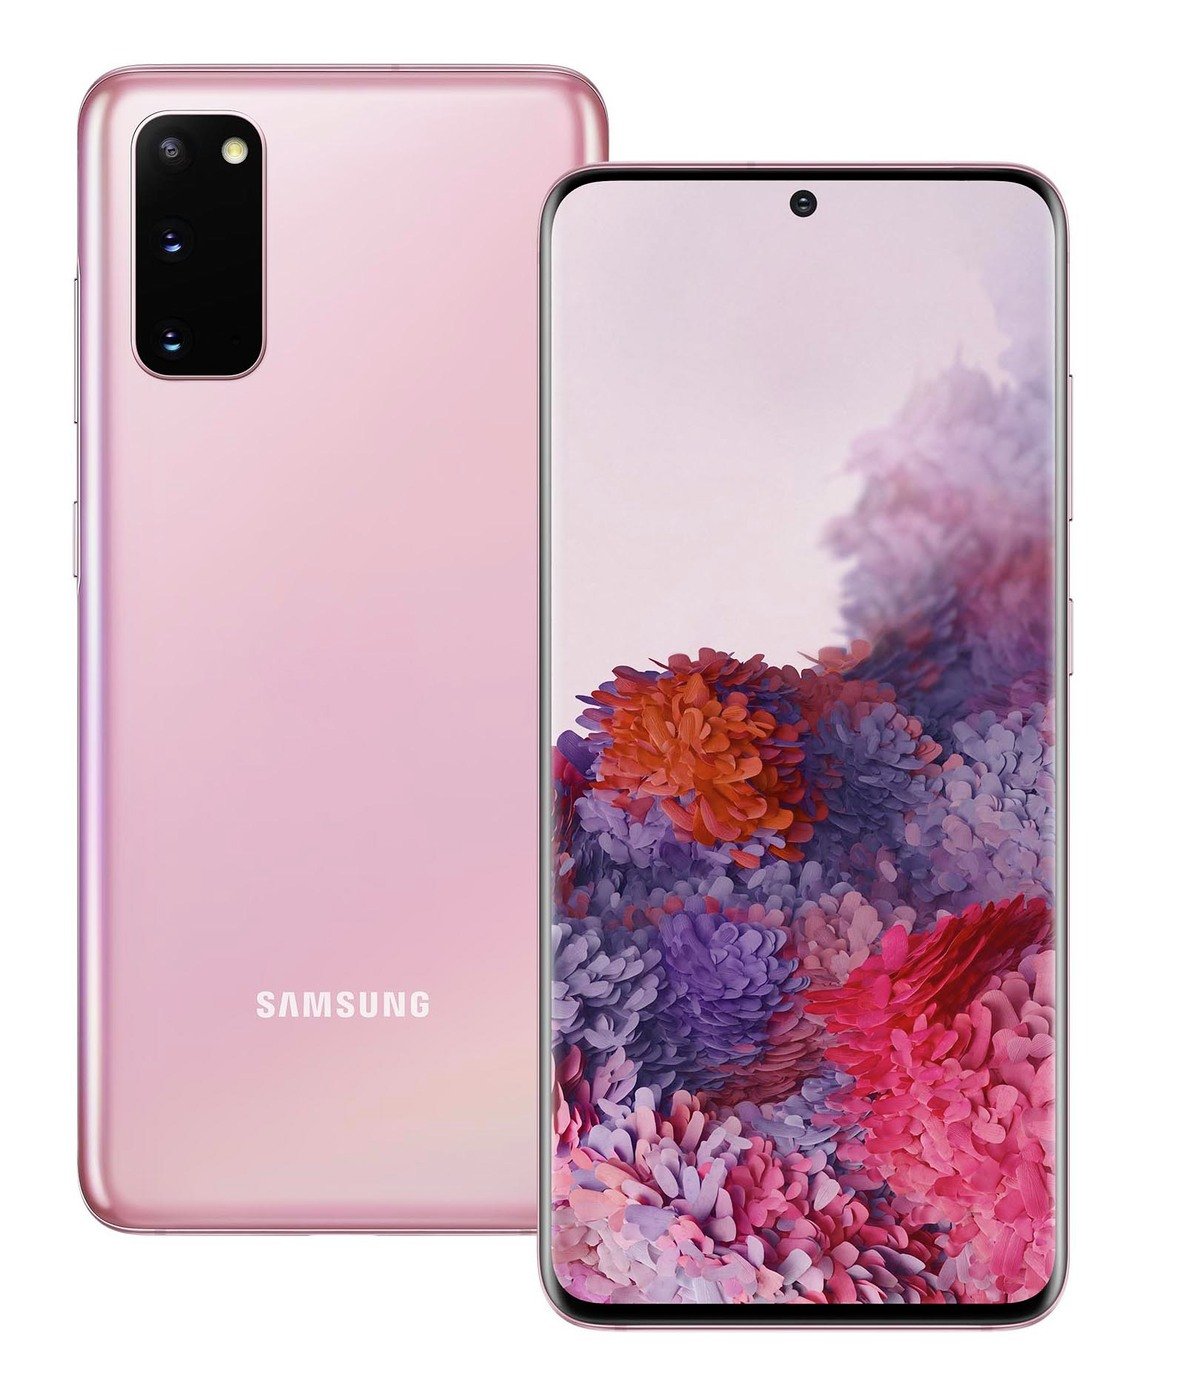 SIM Free Samsung Galaxy S20 128GB 5G Mobile Phone-Cloud Pink Review